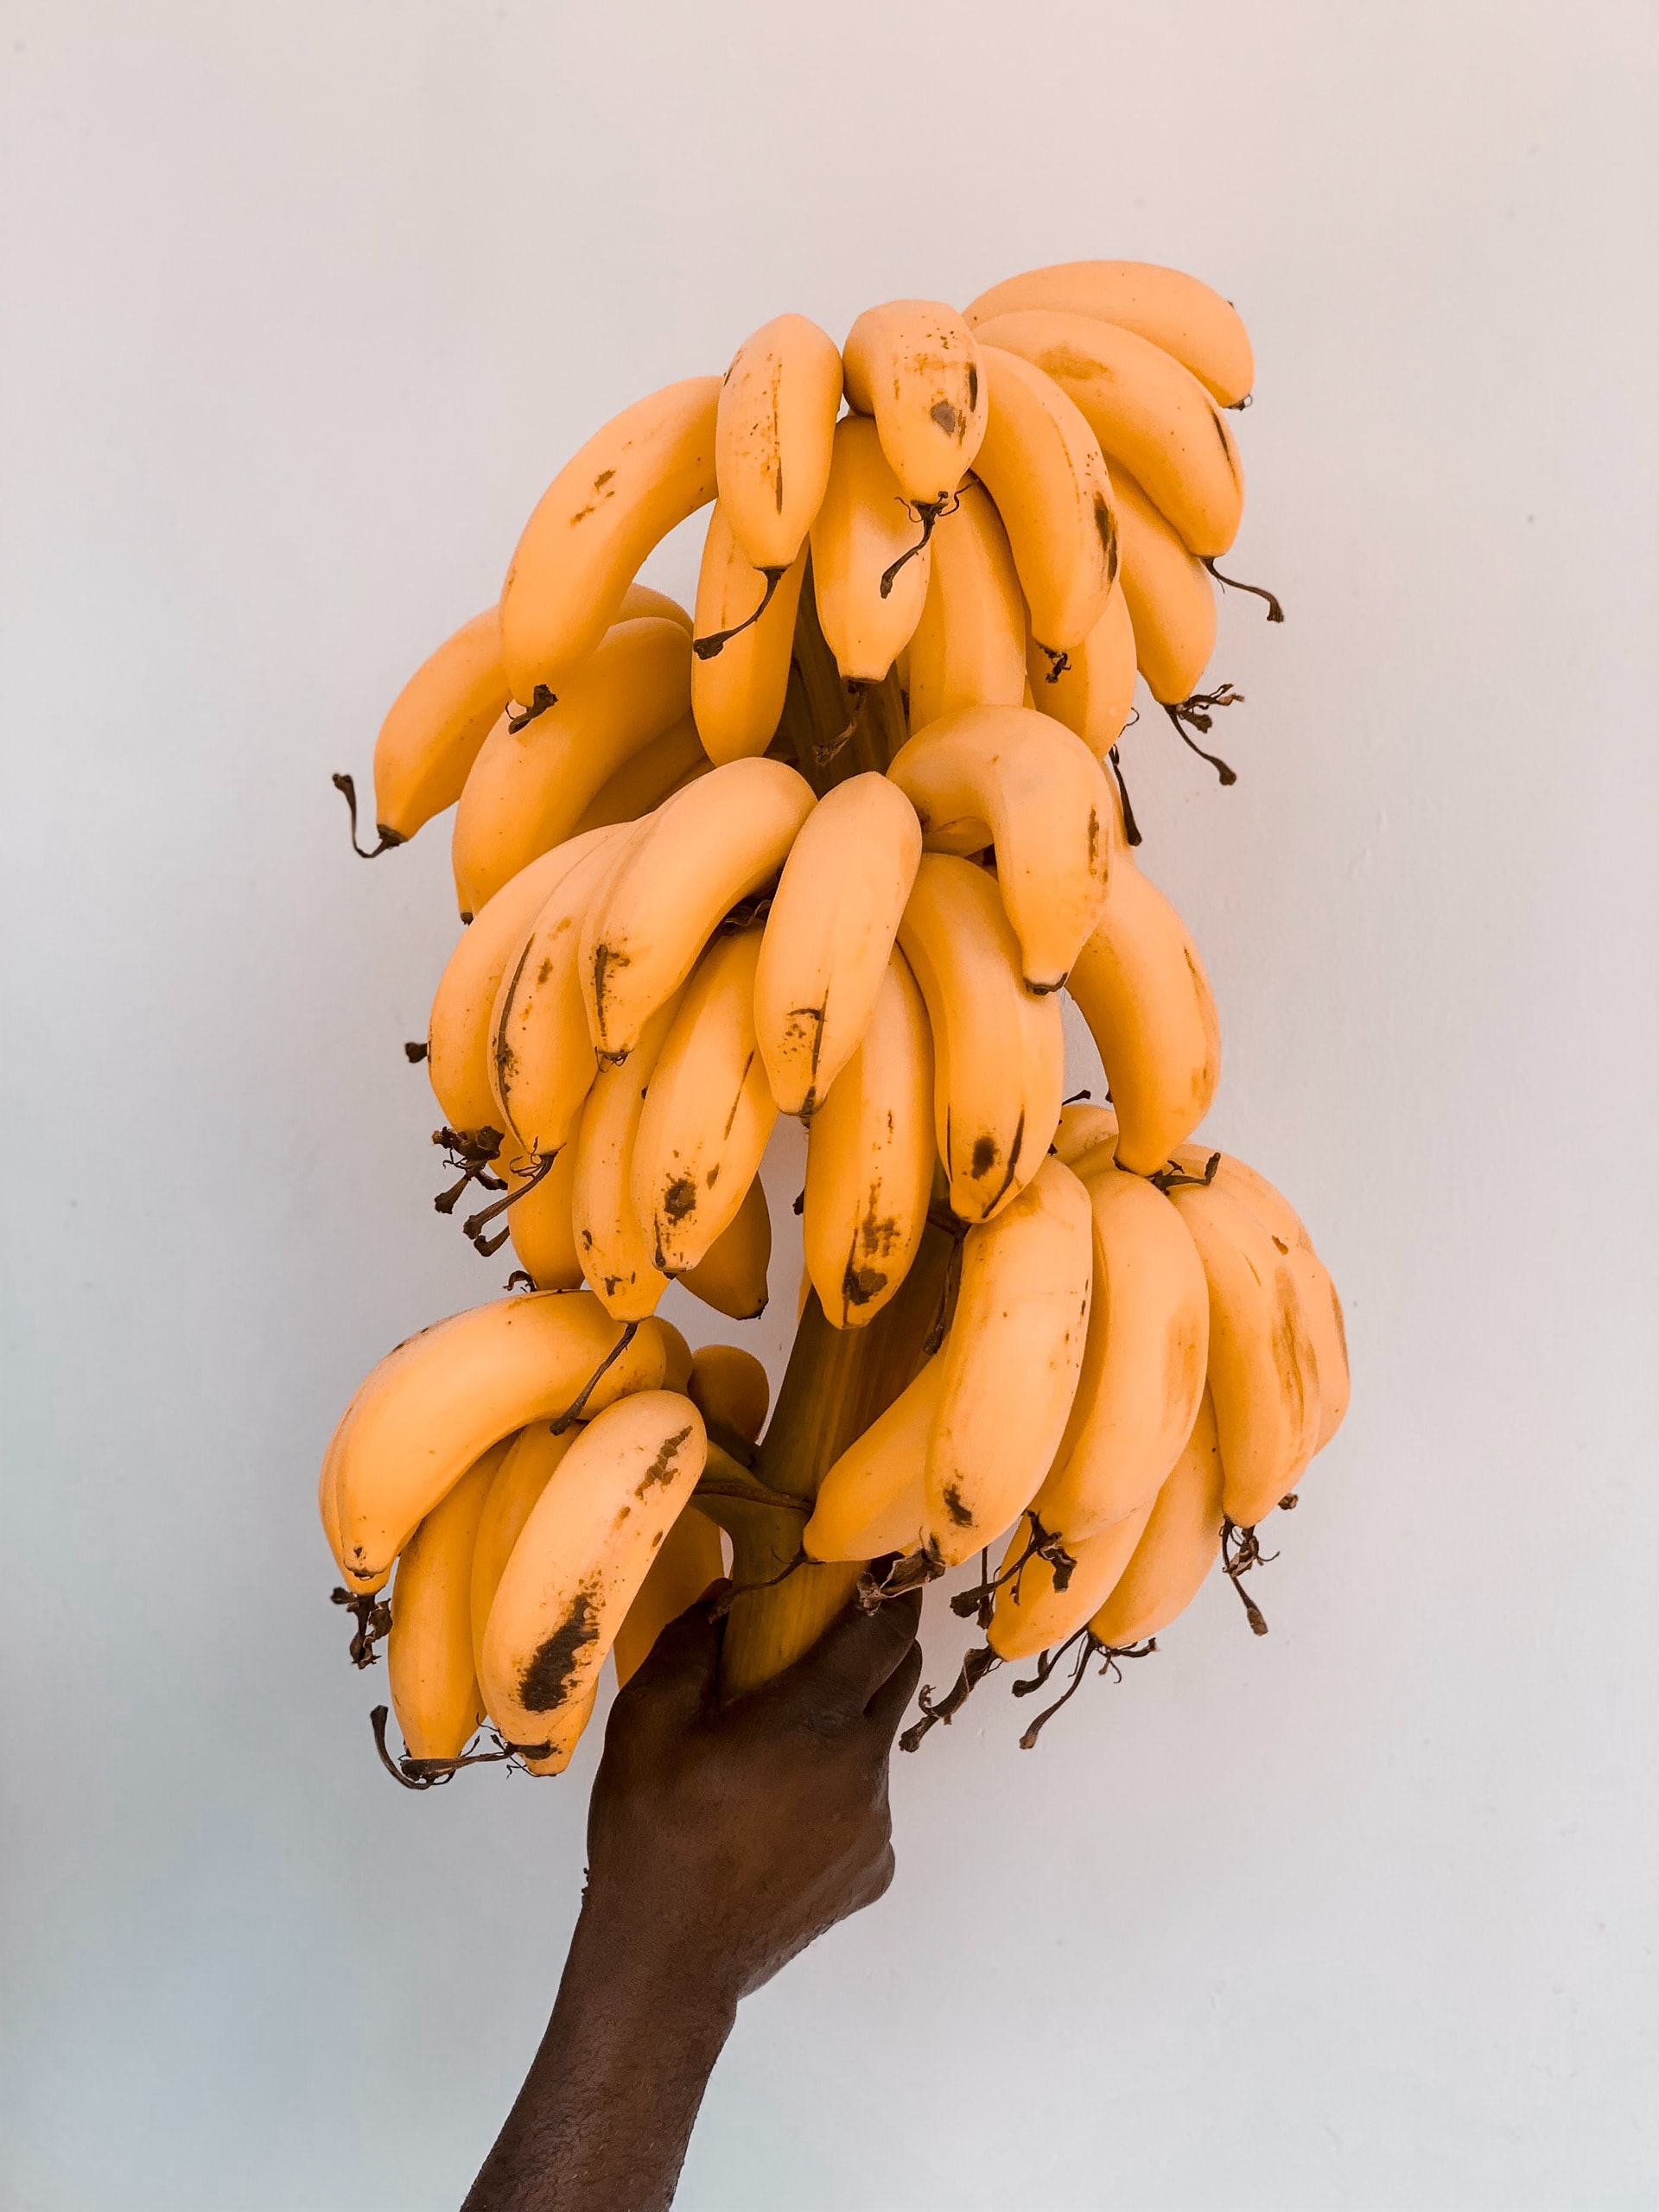 Manfaat pisang barangan